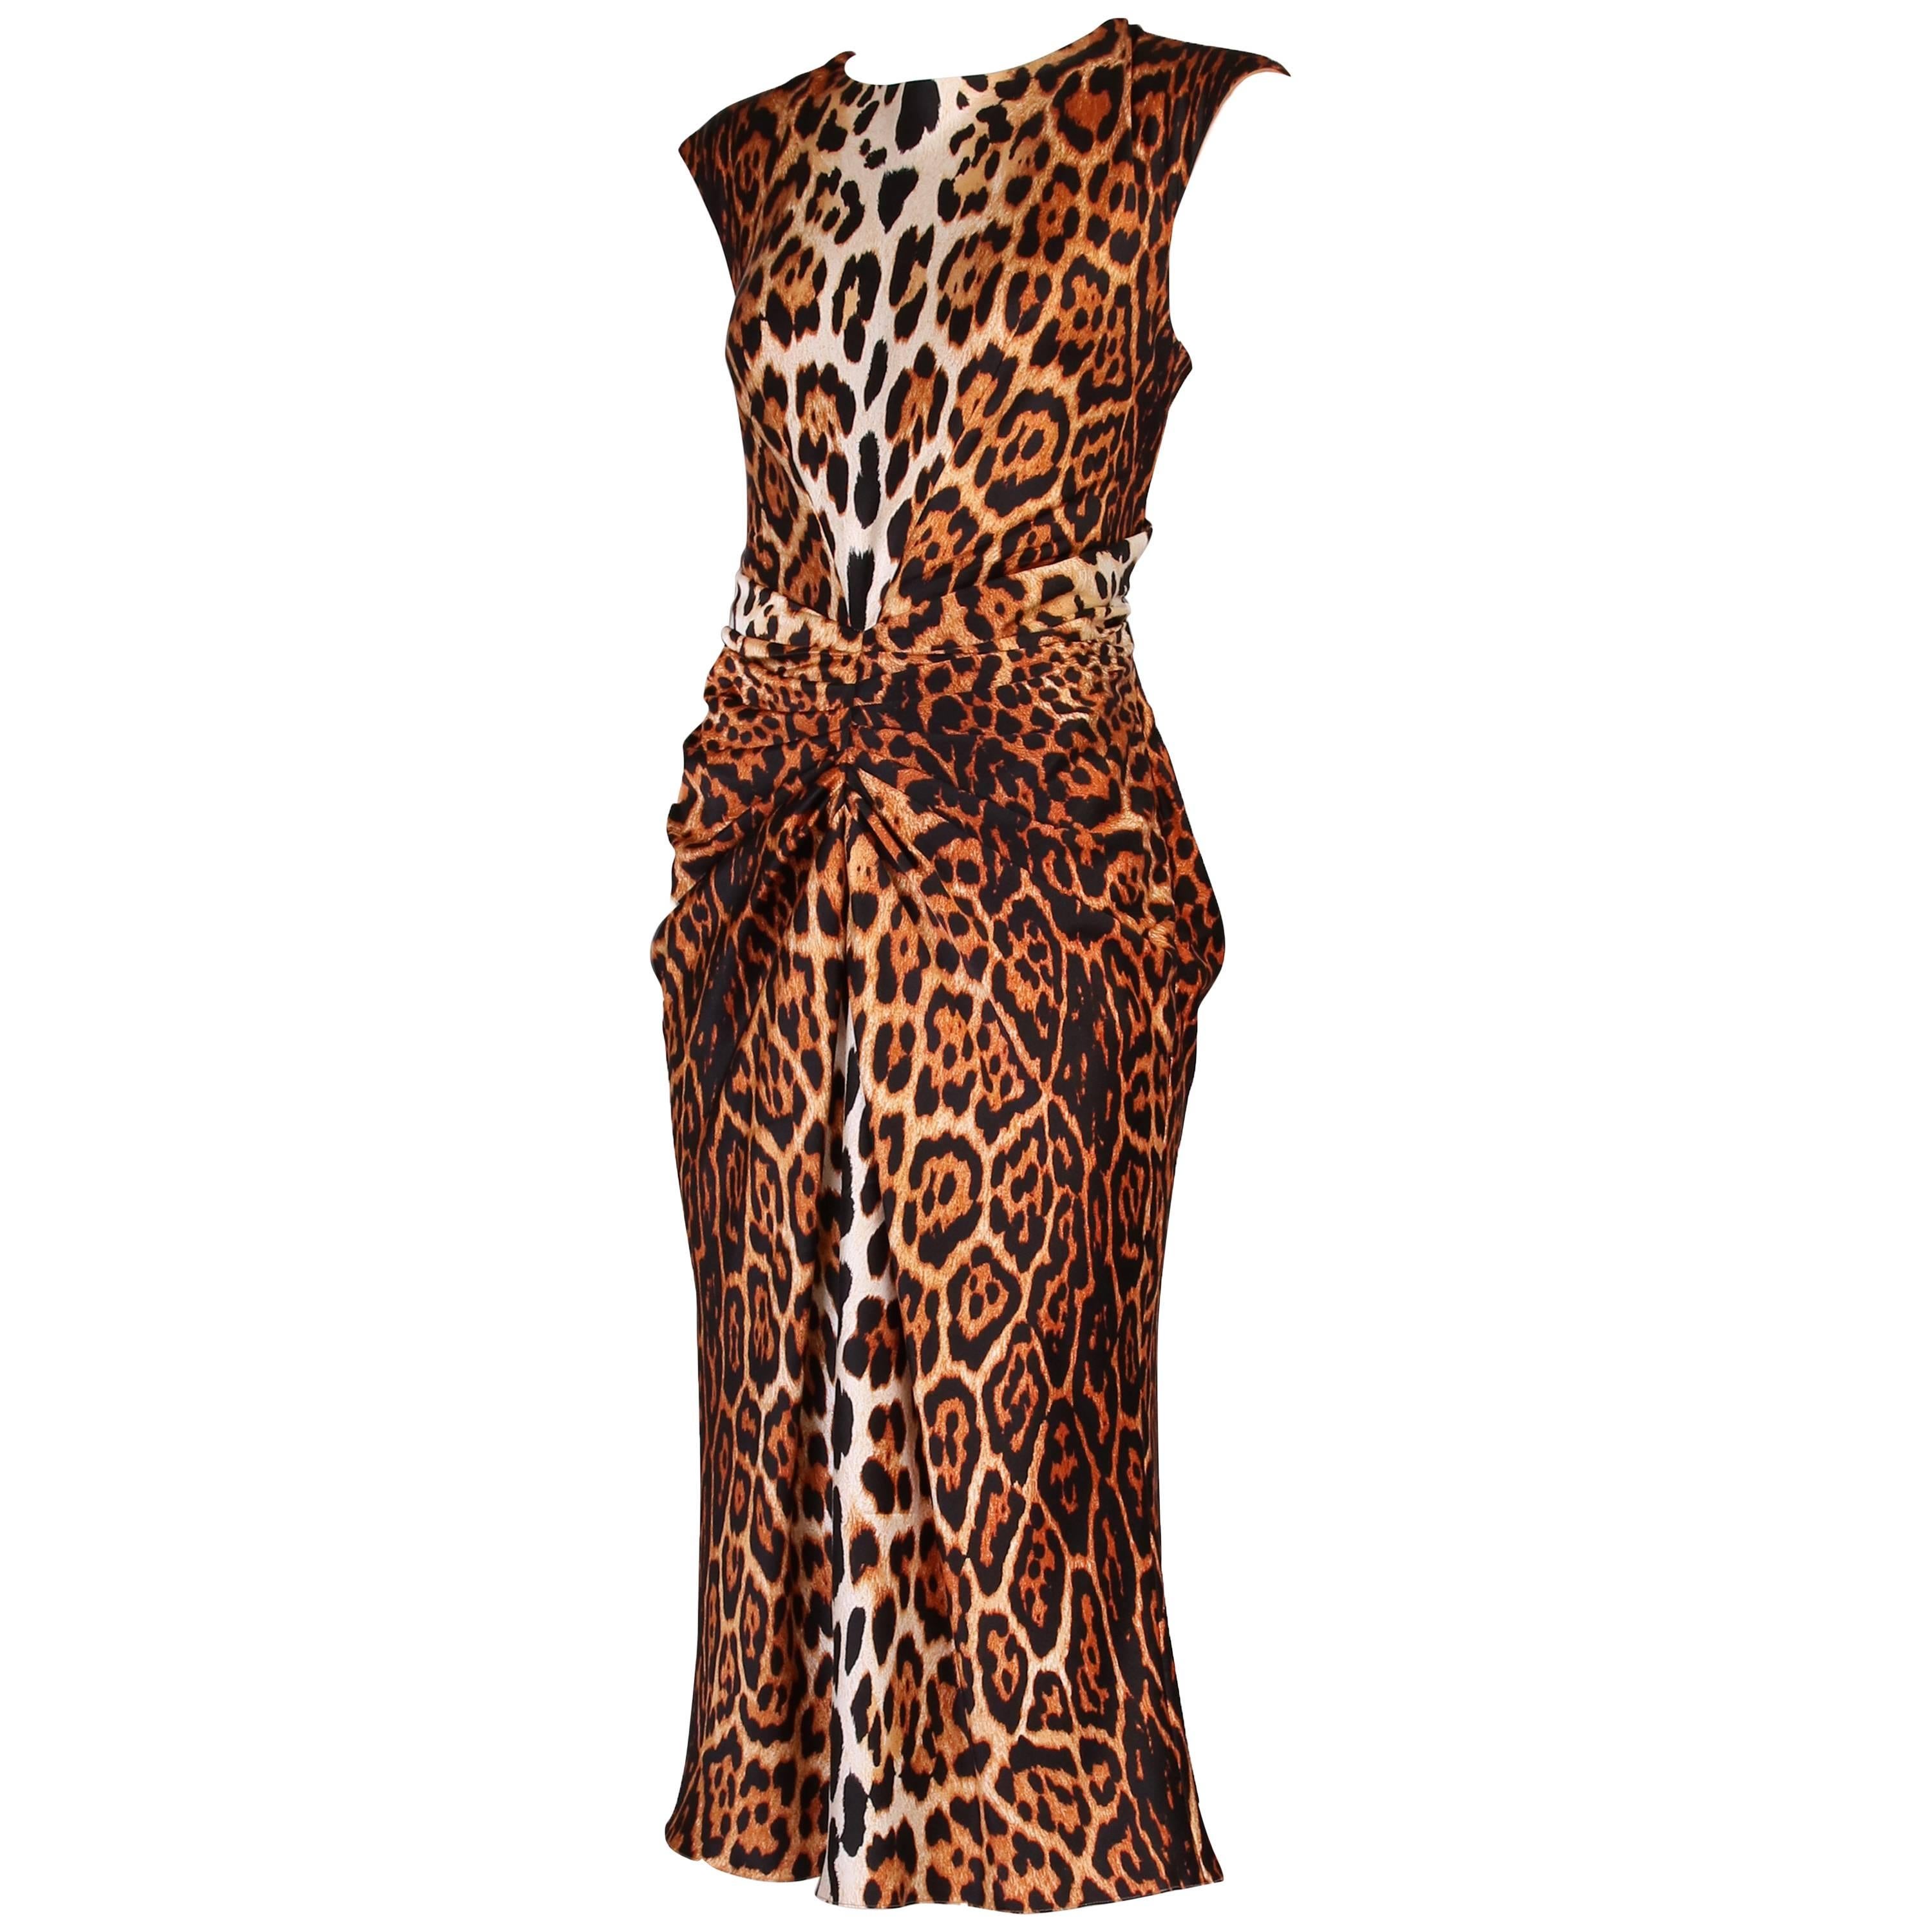 2008 A/H Christian Dior by John Galliano Silk Leopard Cocktail Dress